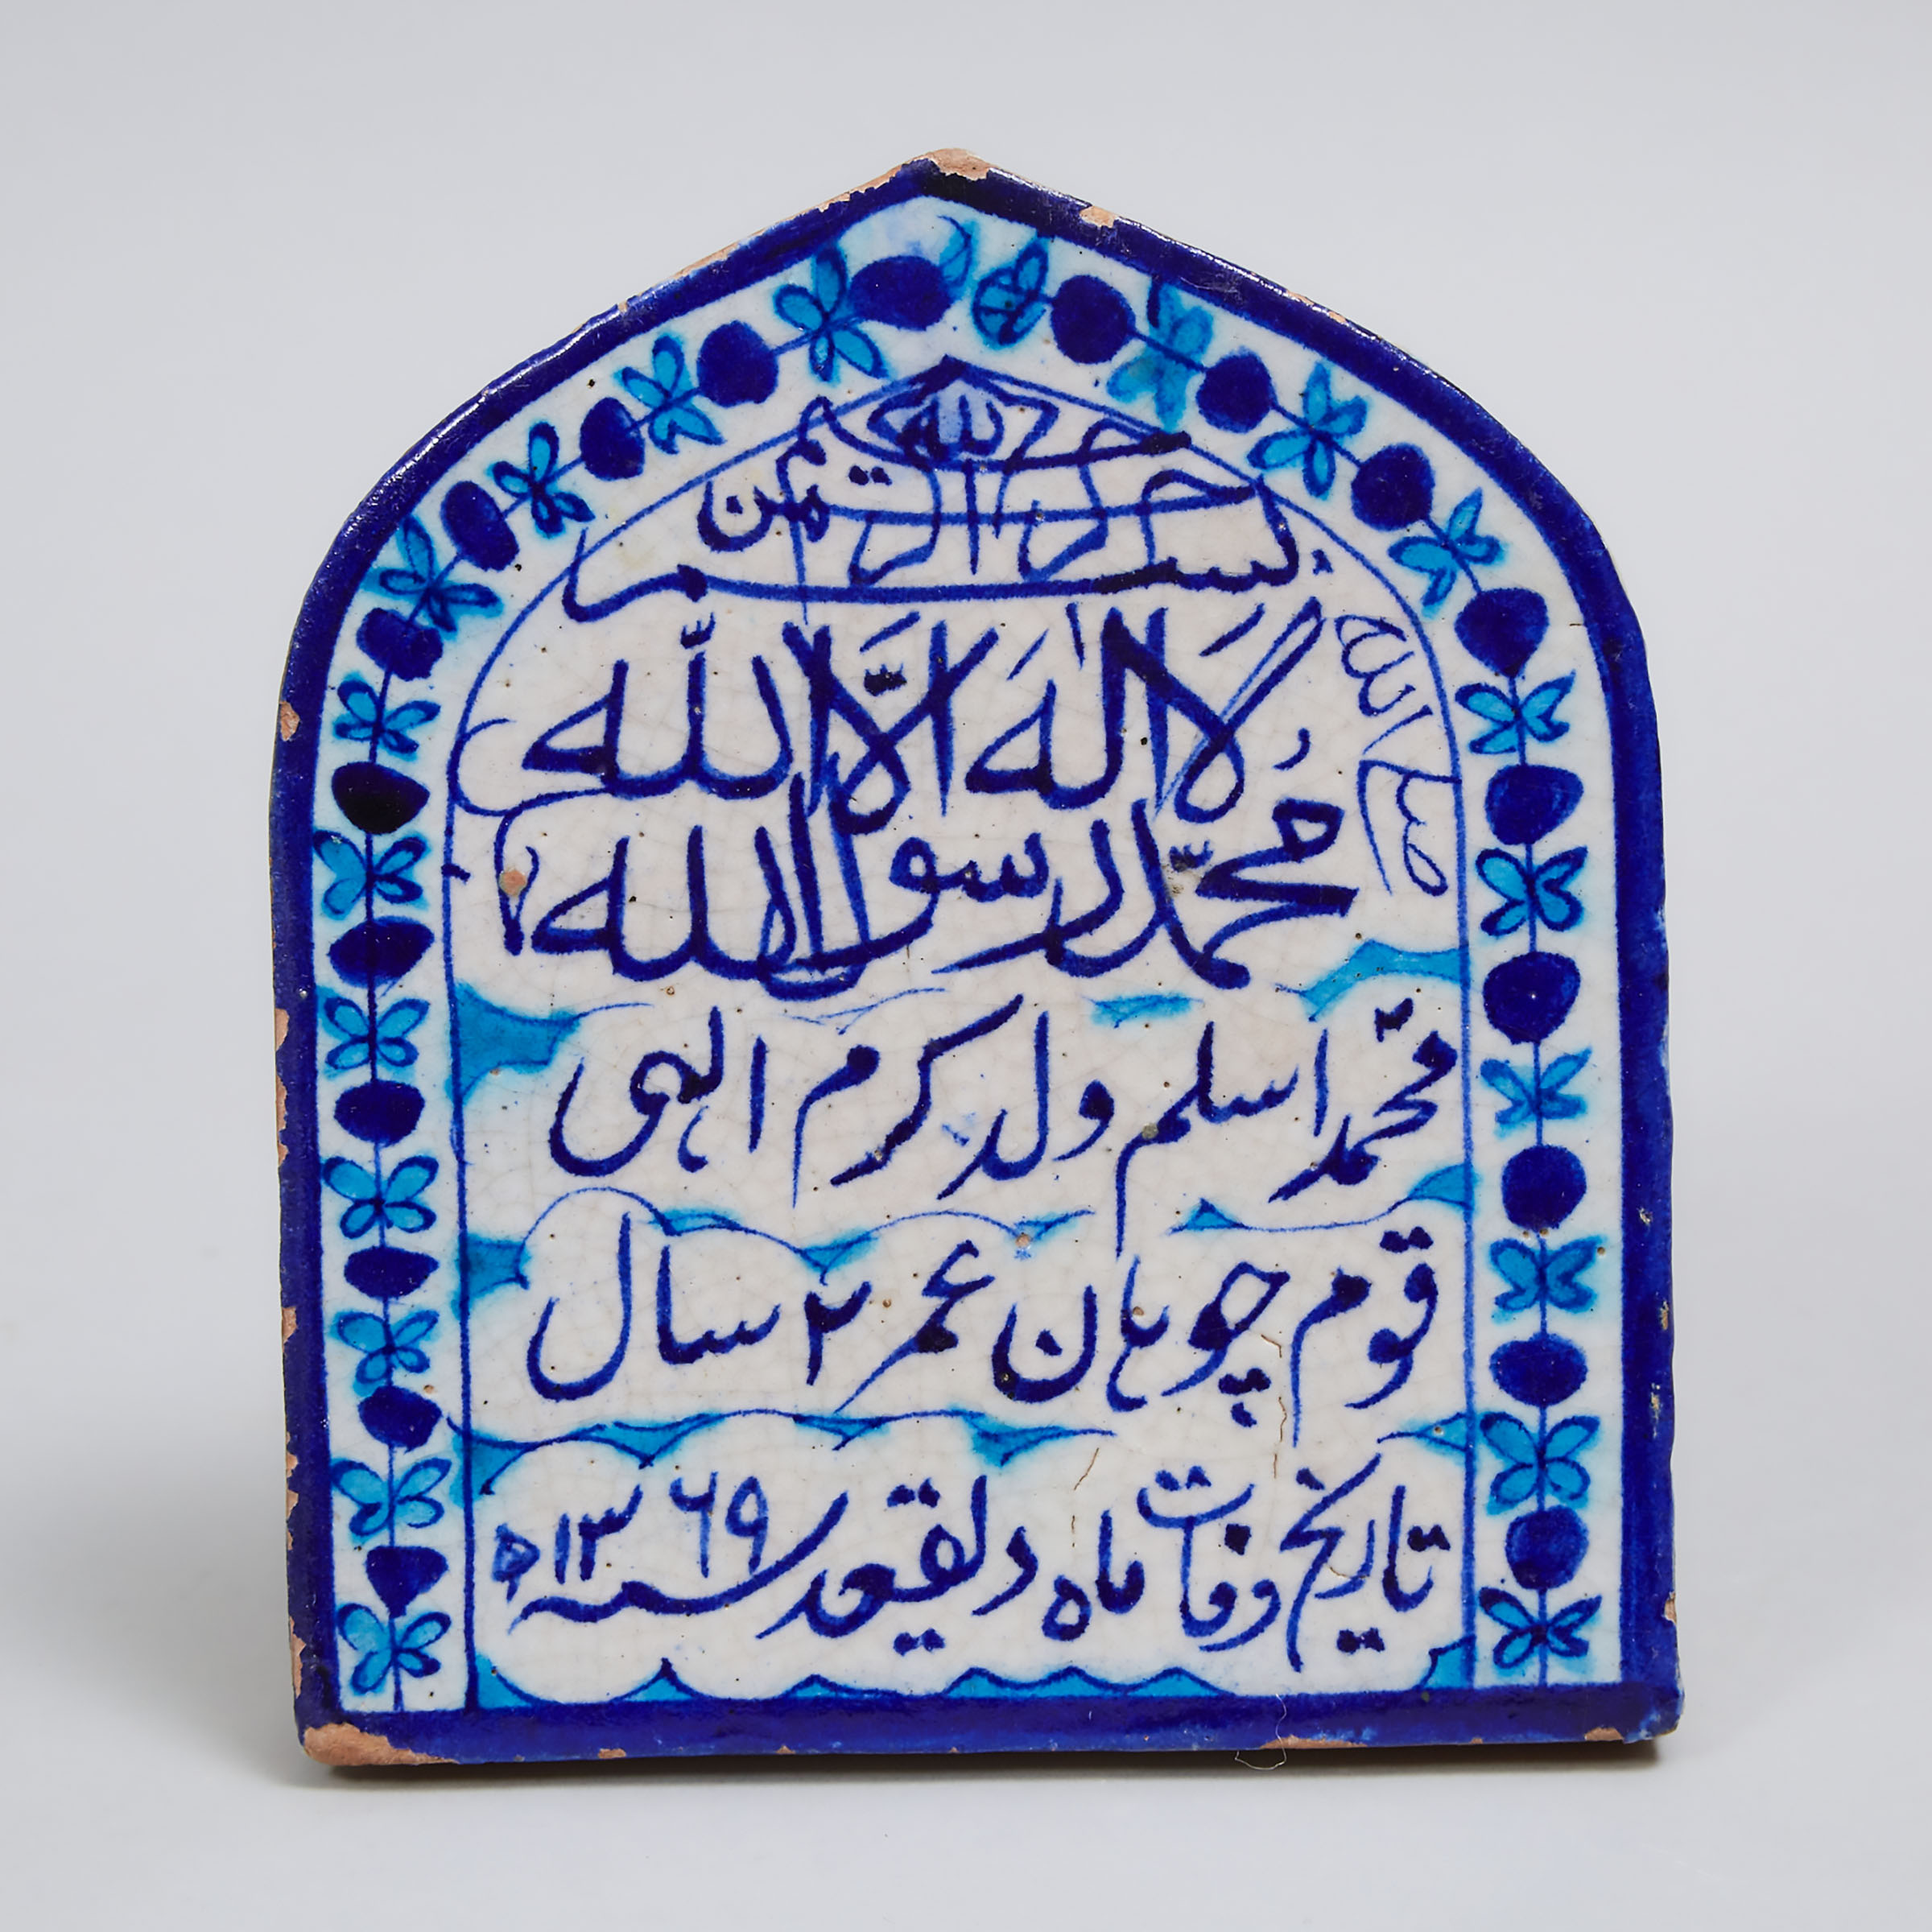 Indo Persian Shiite Cobalt Blue 3abf8a